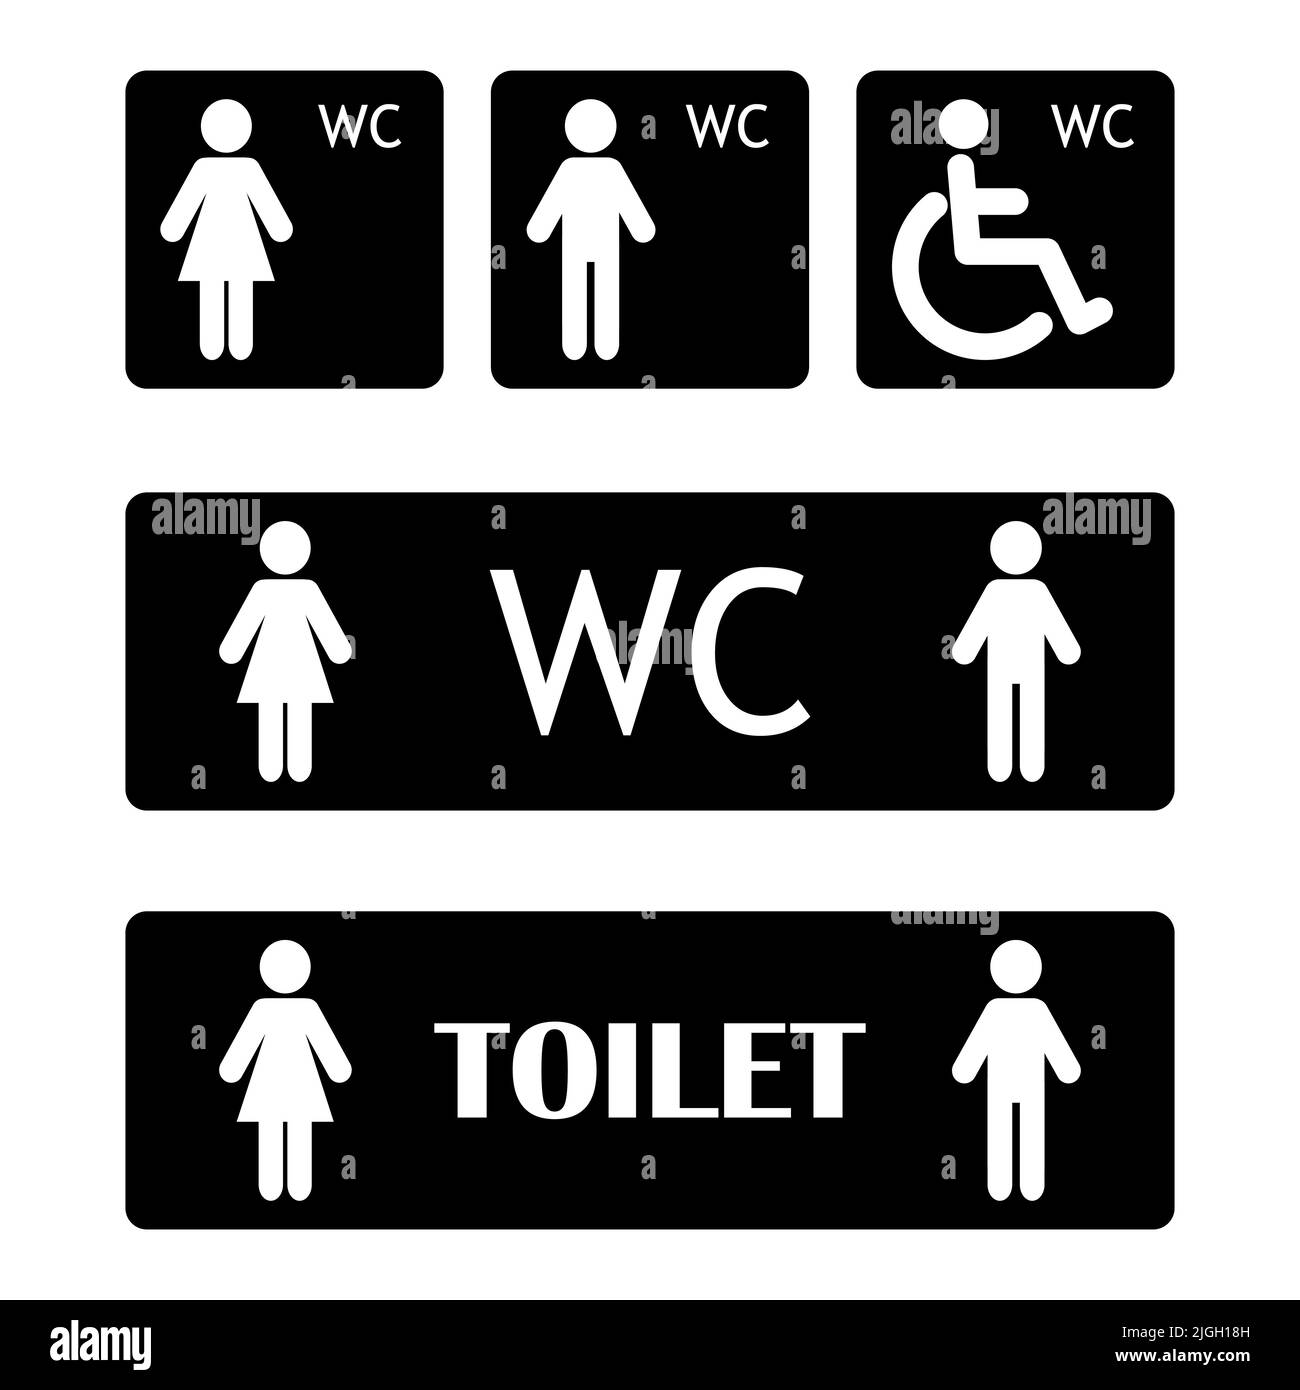 WC sign icon. Toilet symbol. Vector illustration esp10 Stock Vector